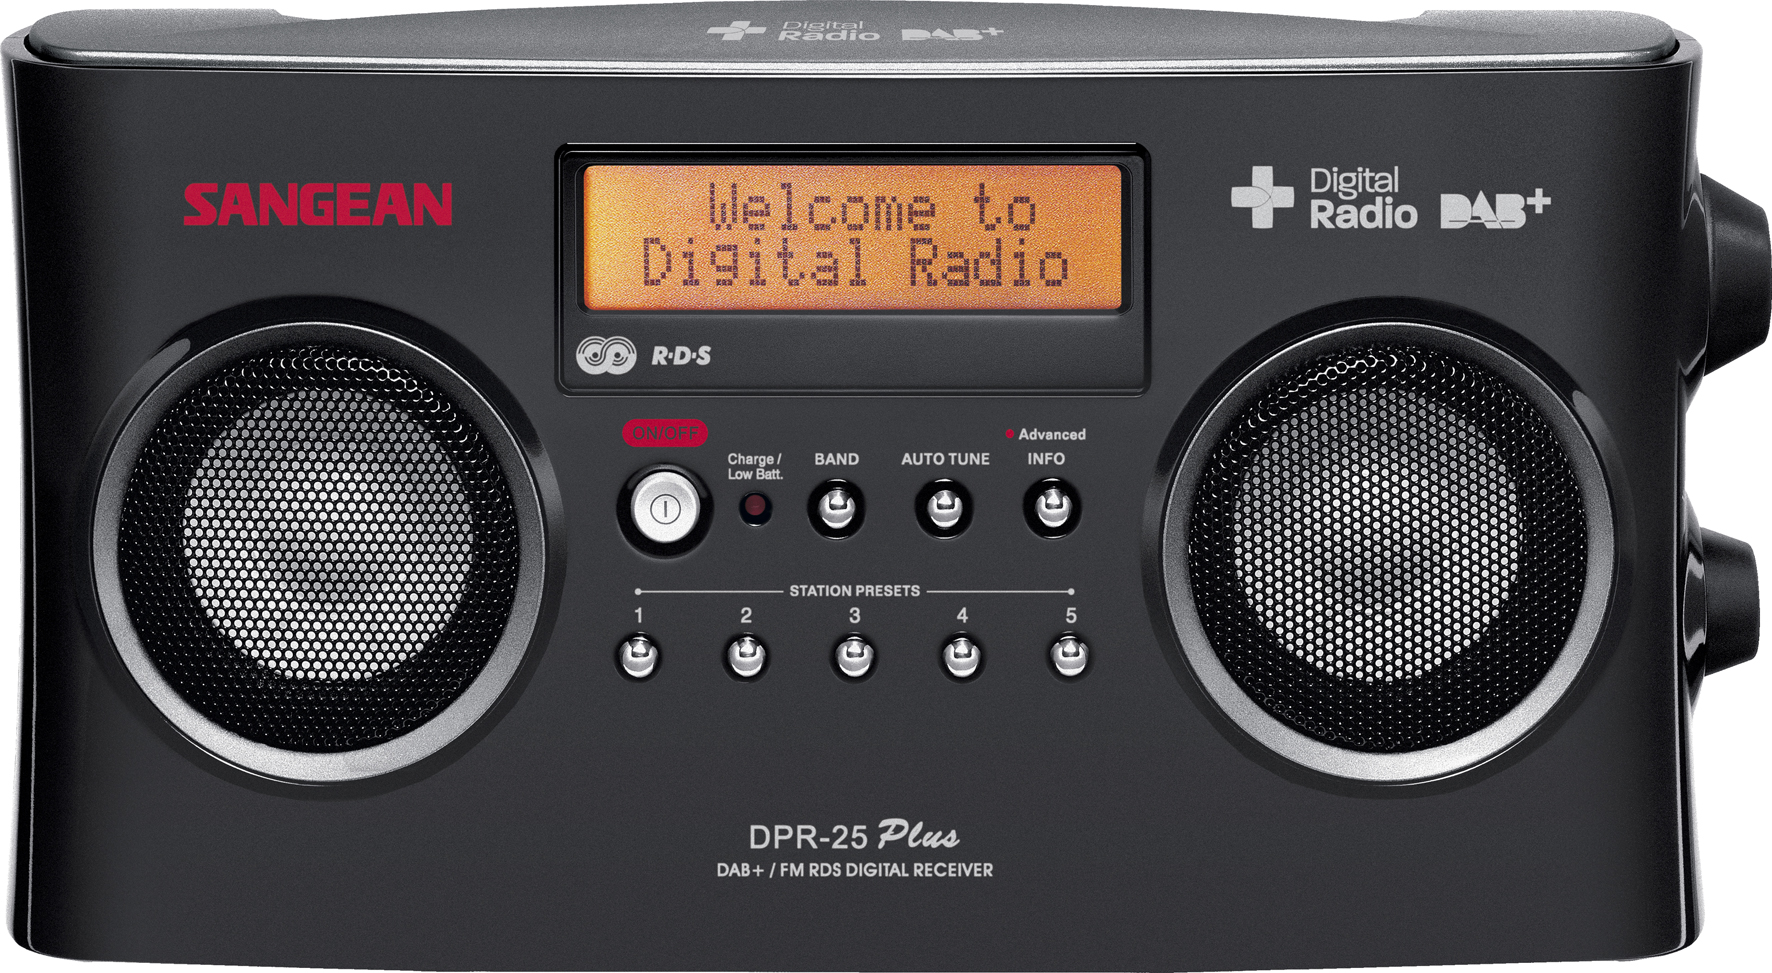 DPR-25+, digitale radio, stereo, DAB+, zwart